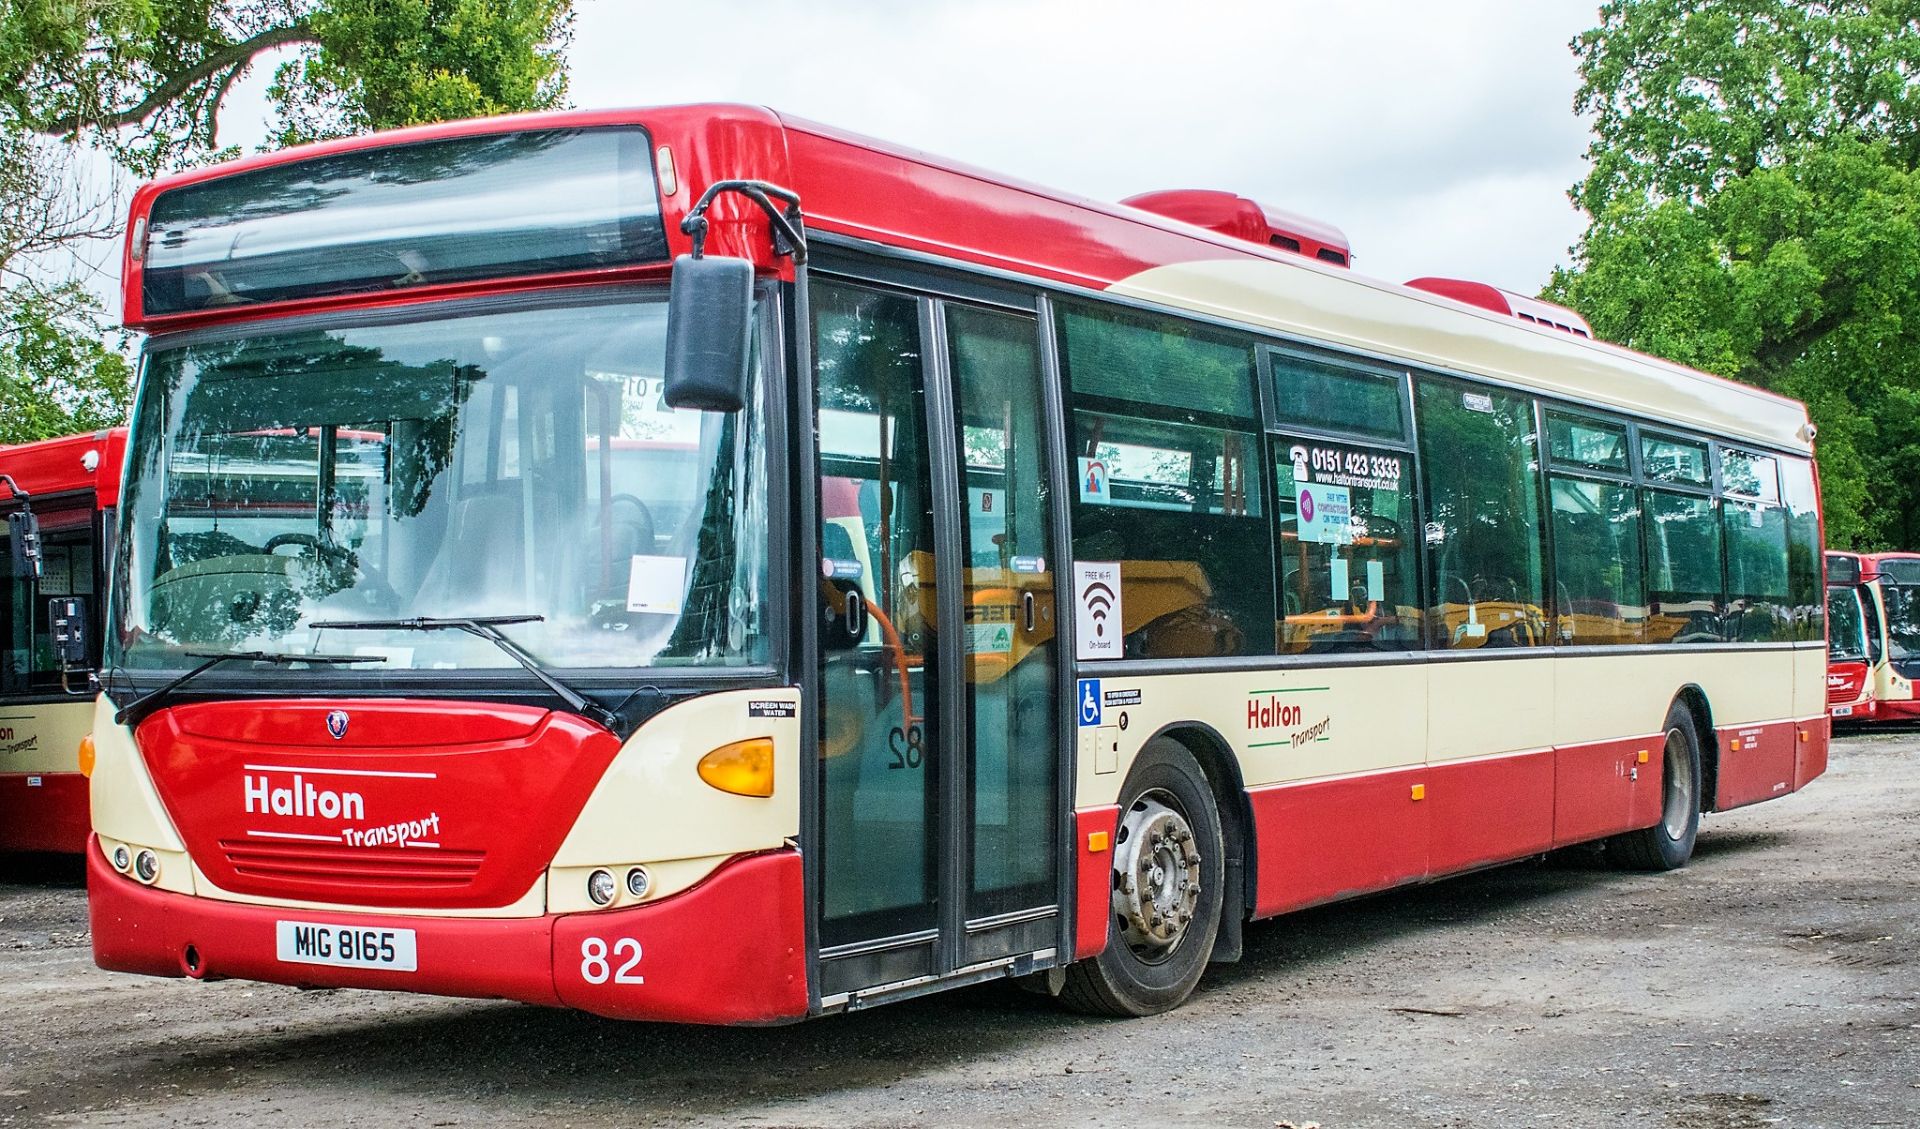 Scania OmniCity 33 seat single deck service bus Registration Number: MIG 8165 Date of